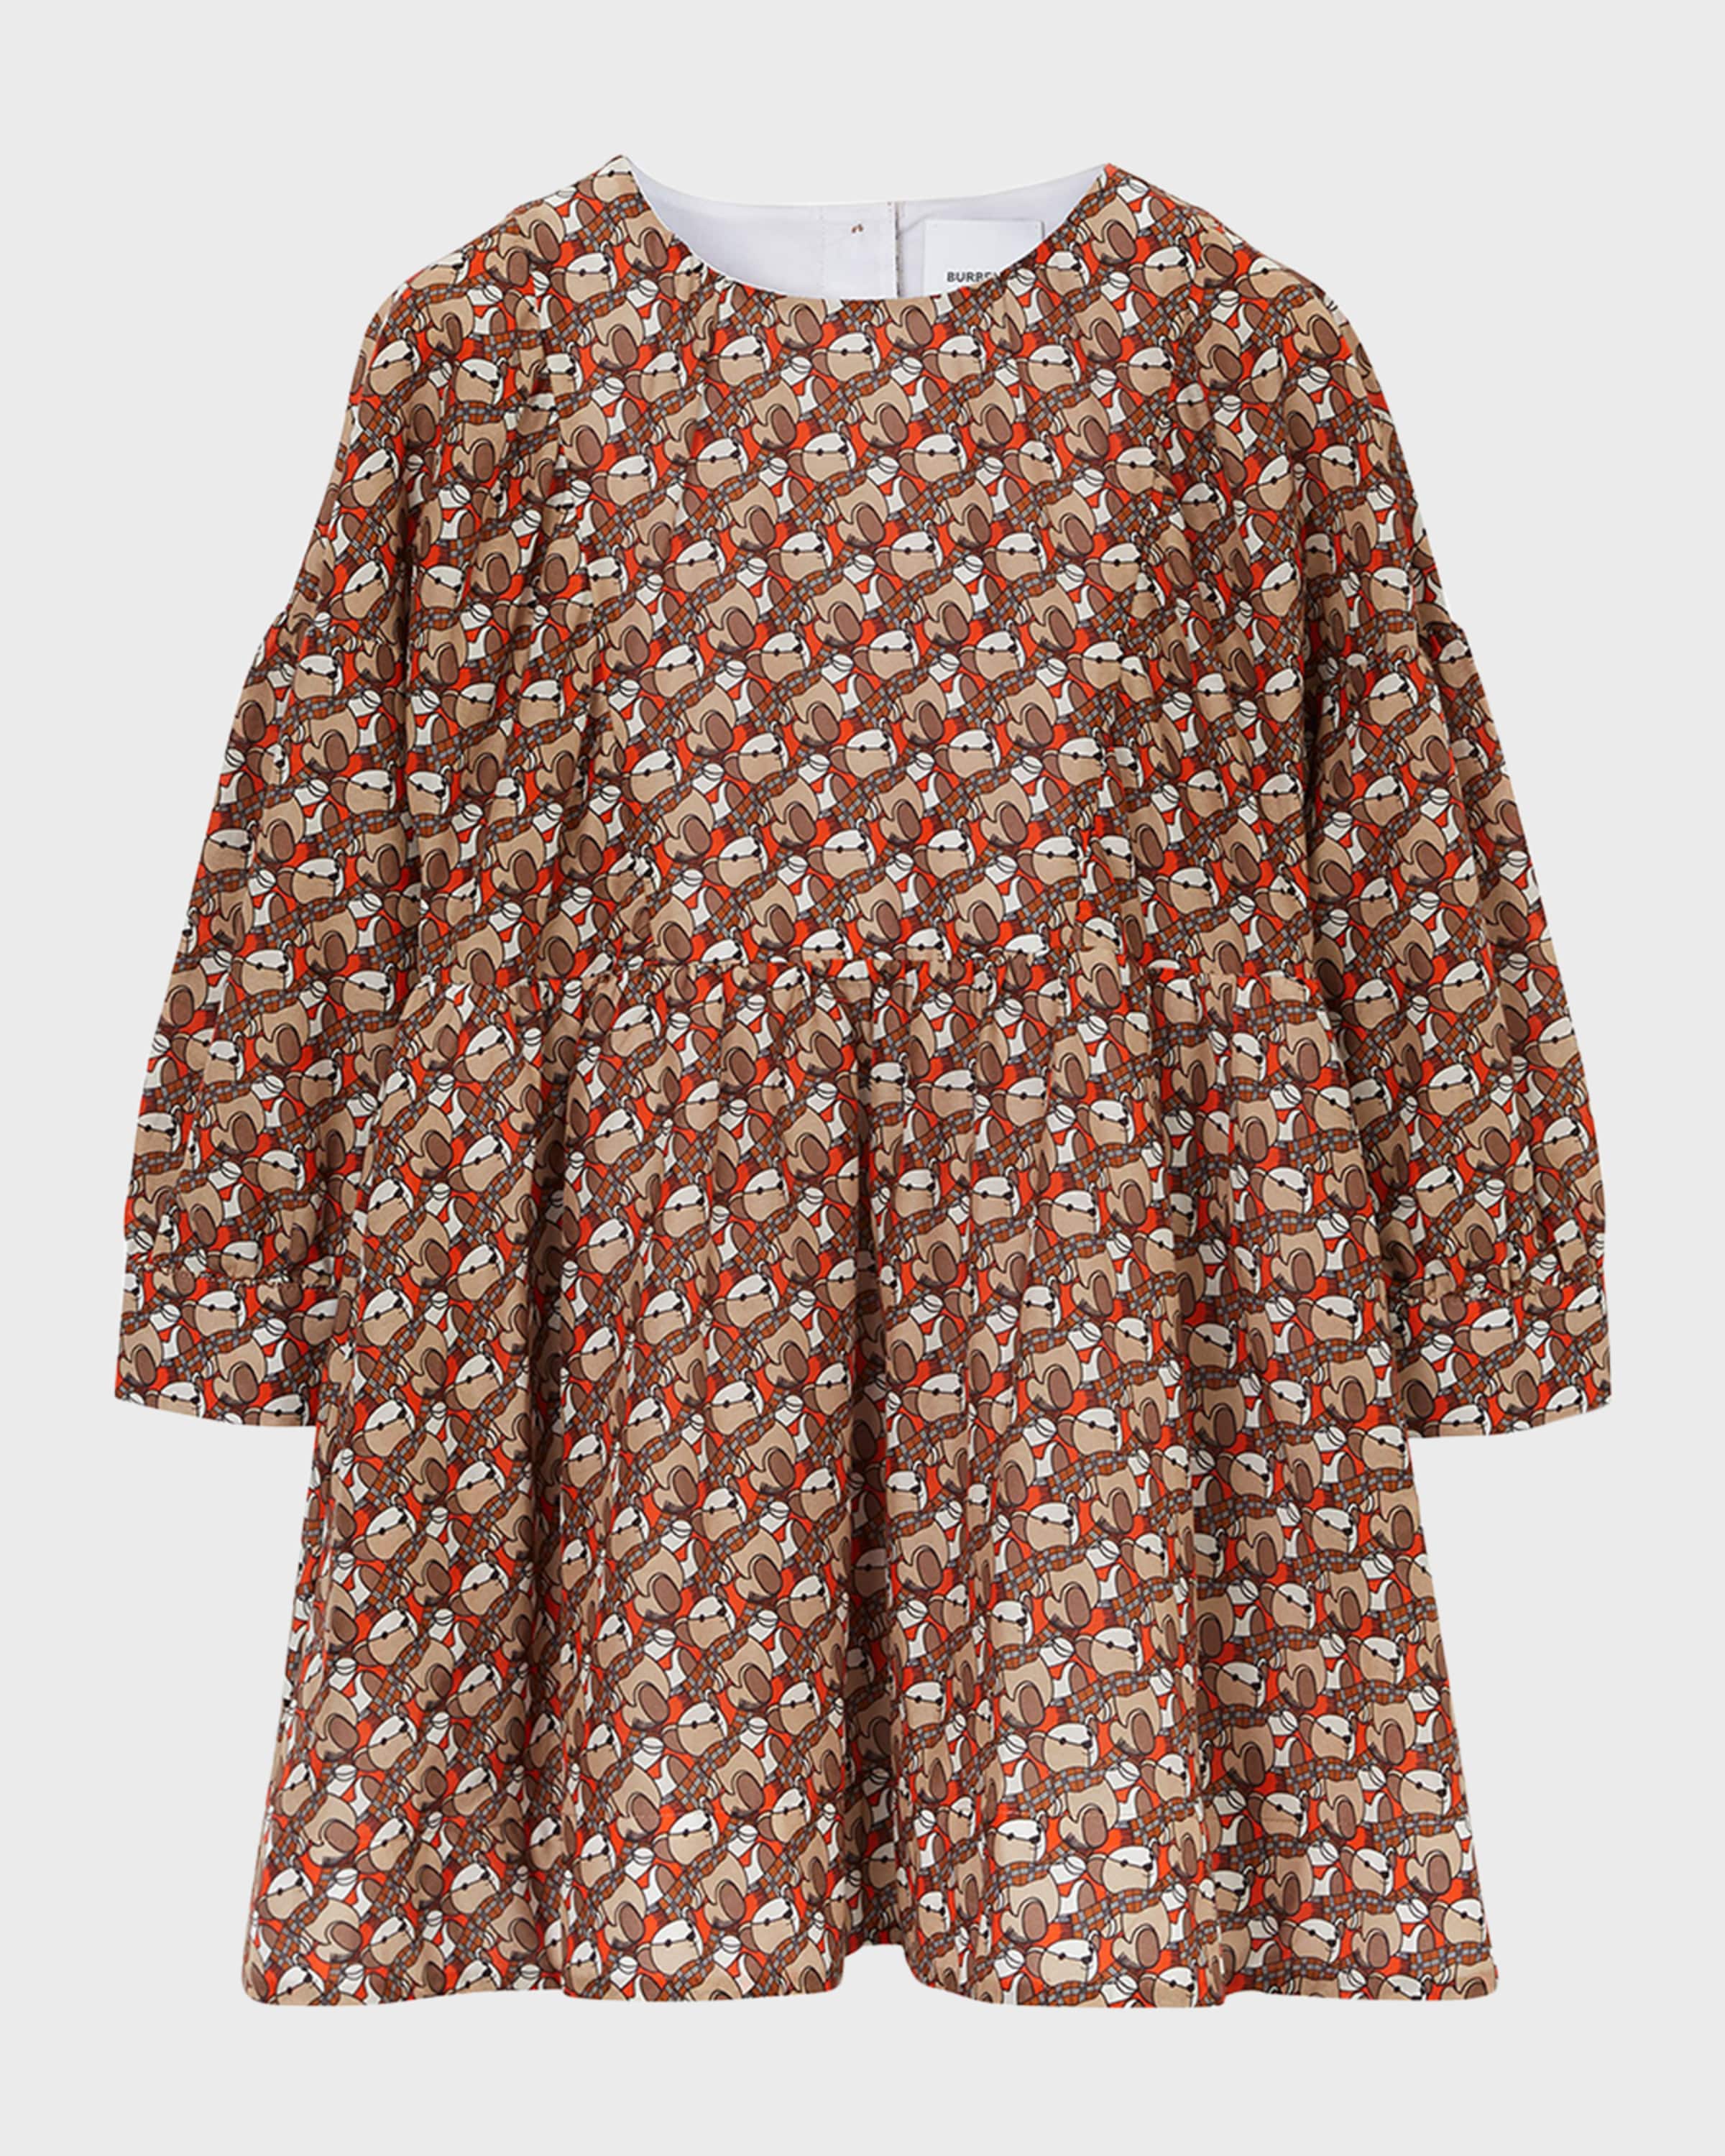 undefined | Girl's Elita Teddy-Print Dress, Size 4-12